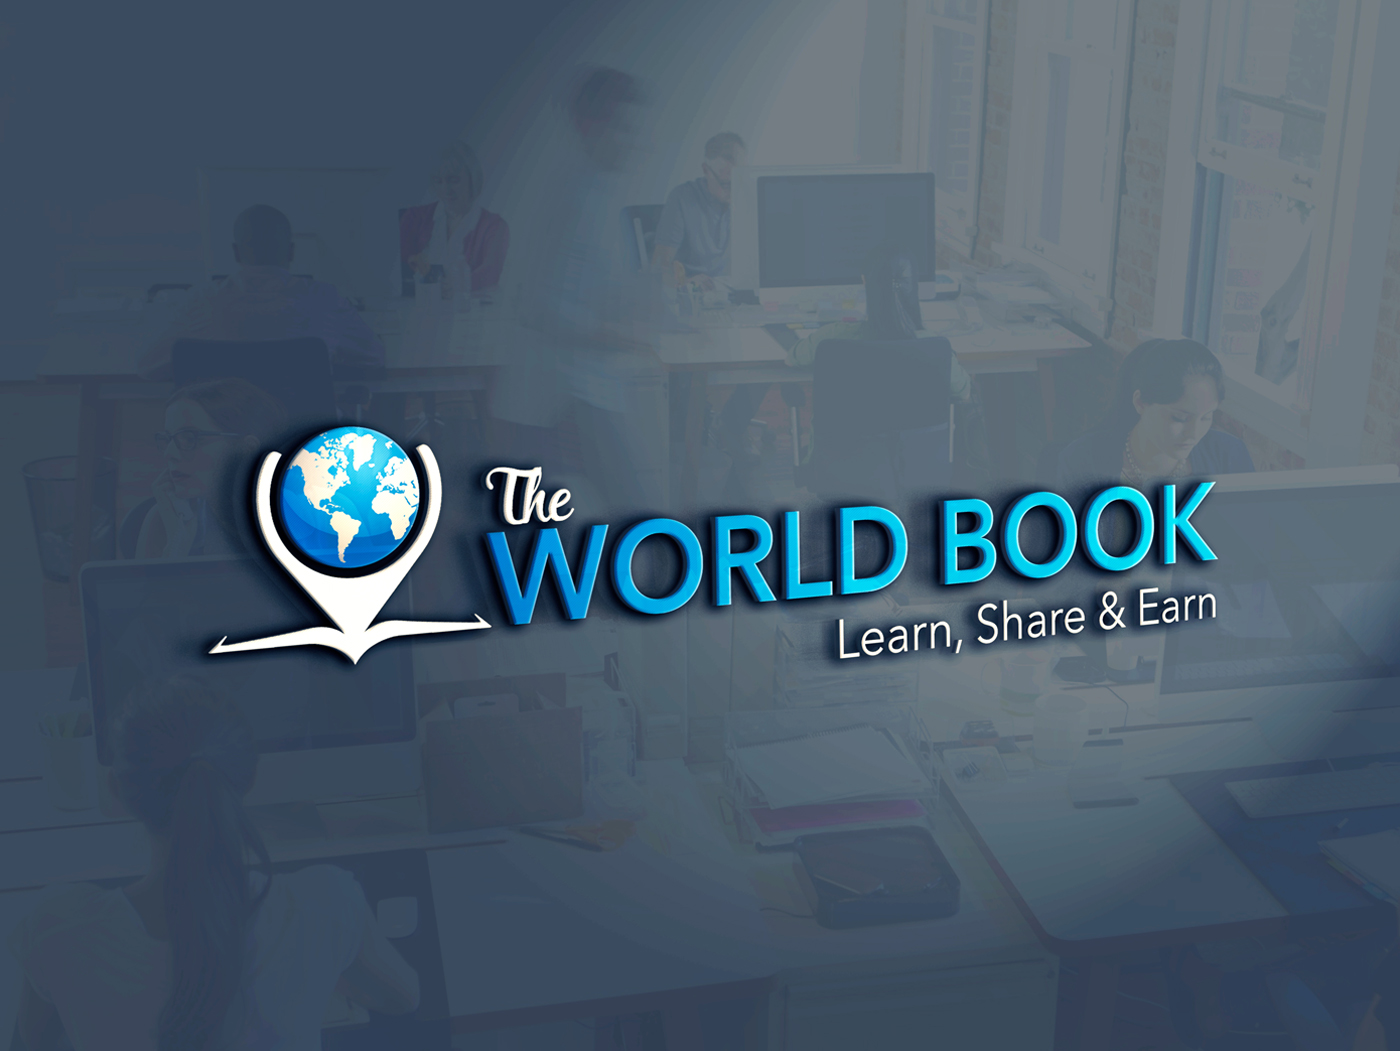 The World Book logo